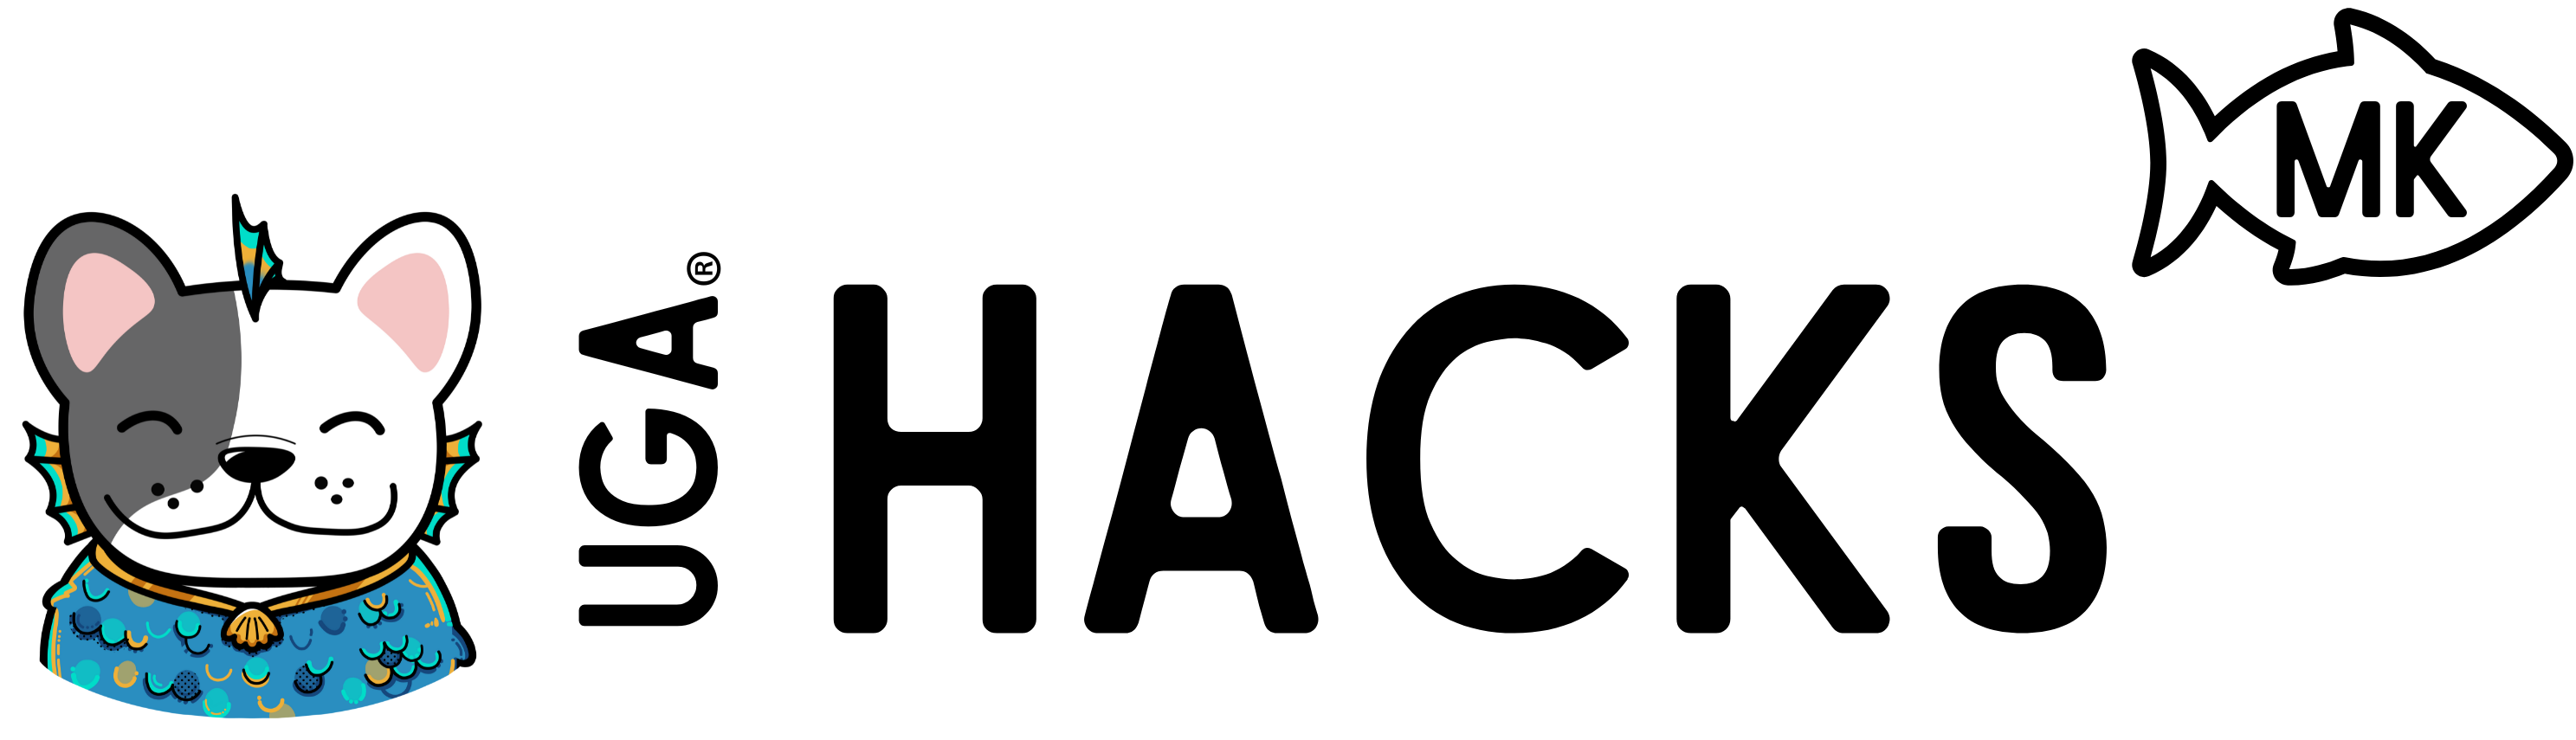 makeathon logo